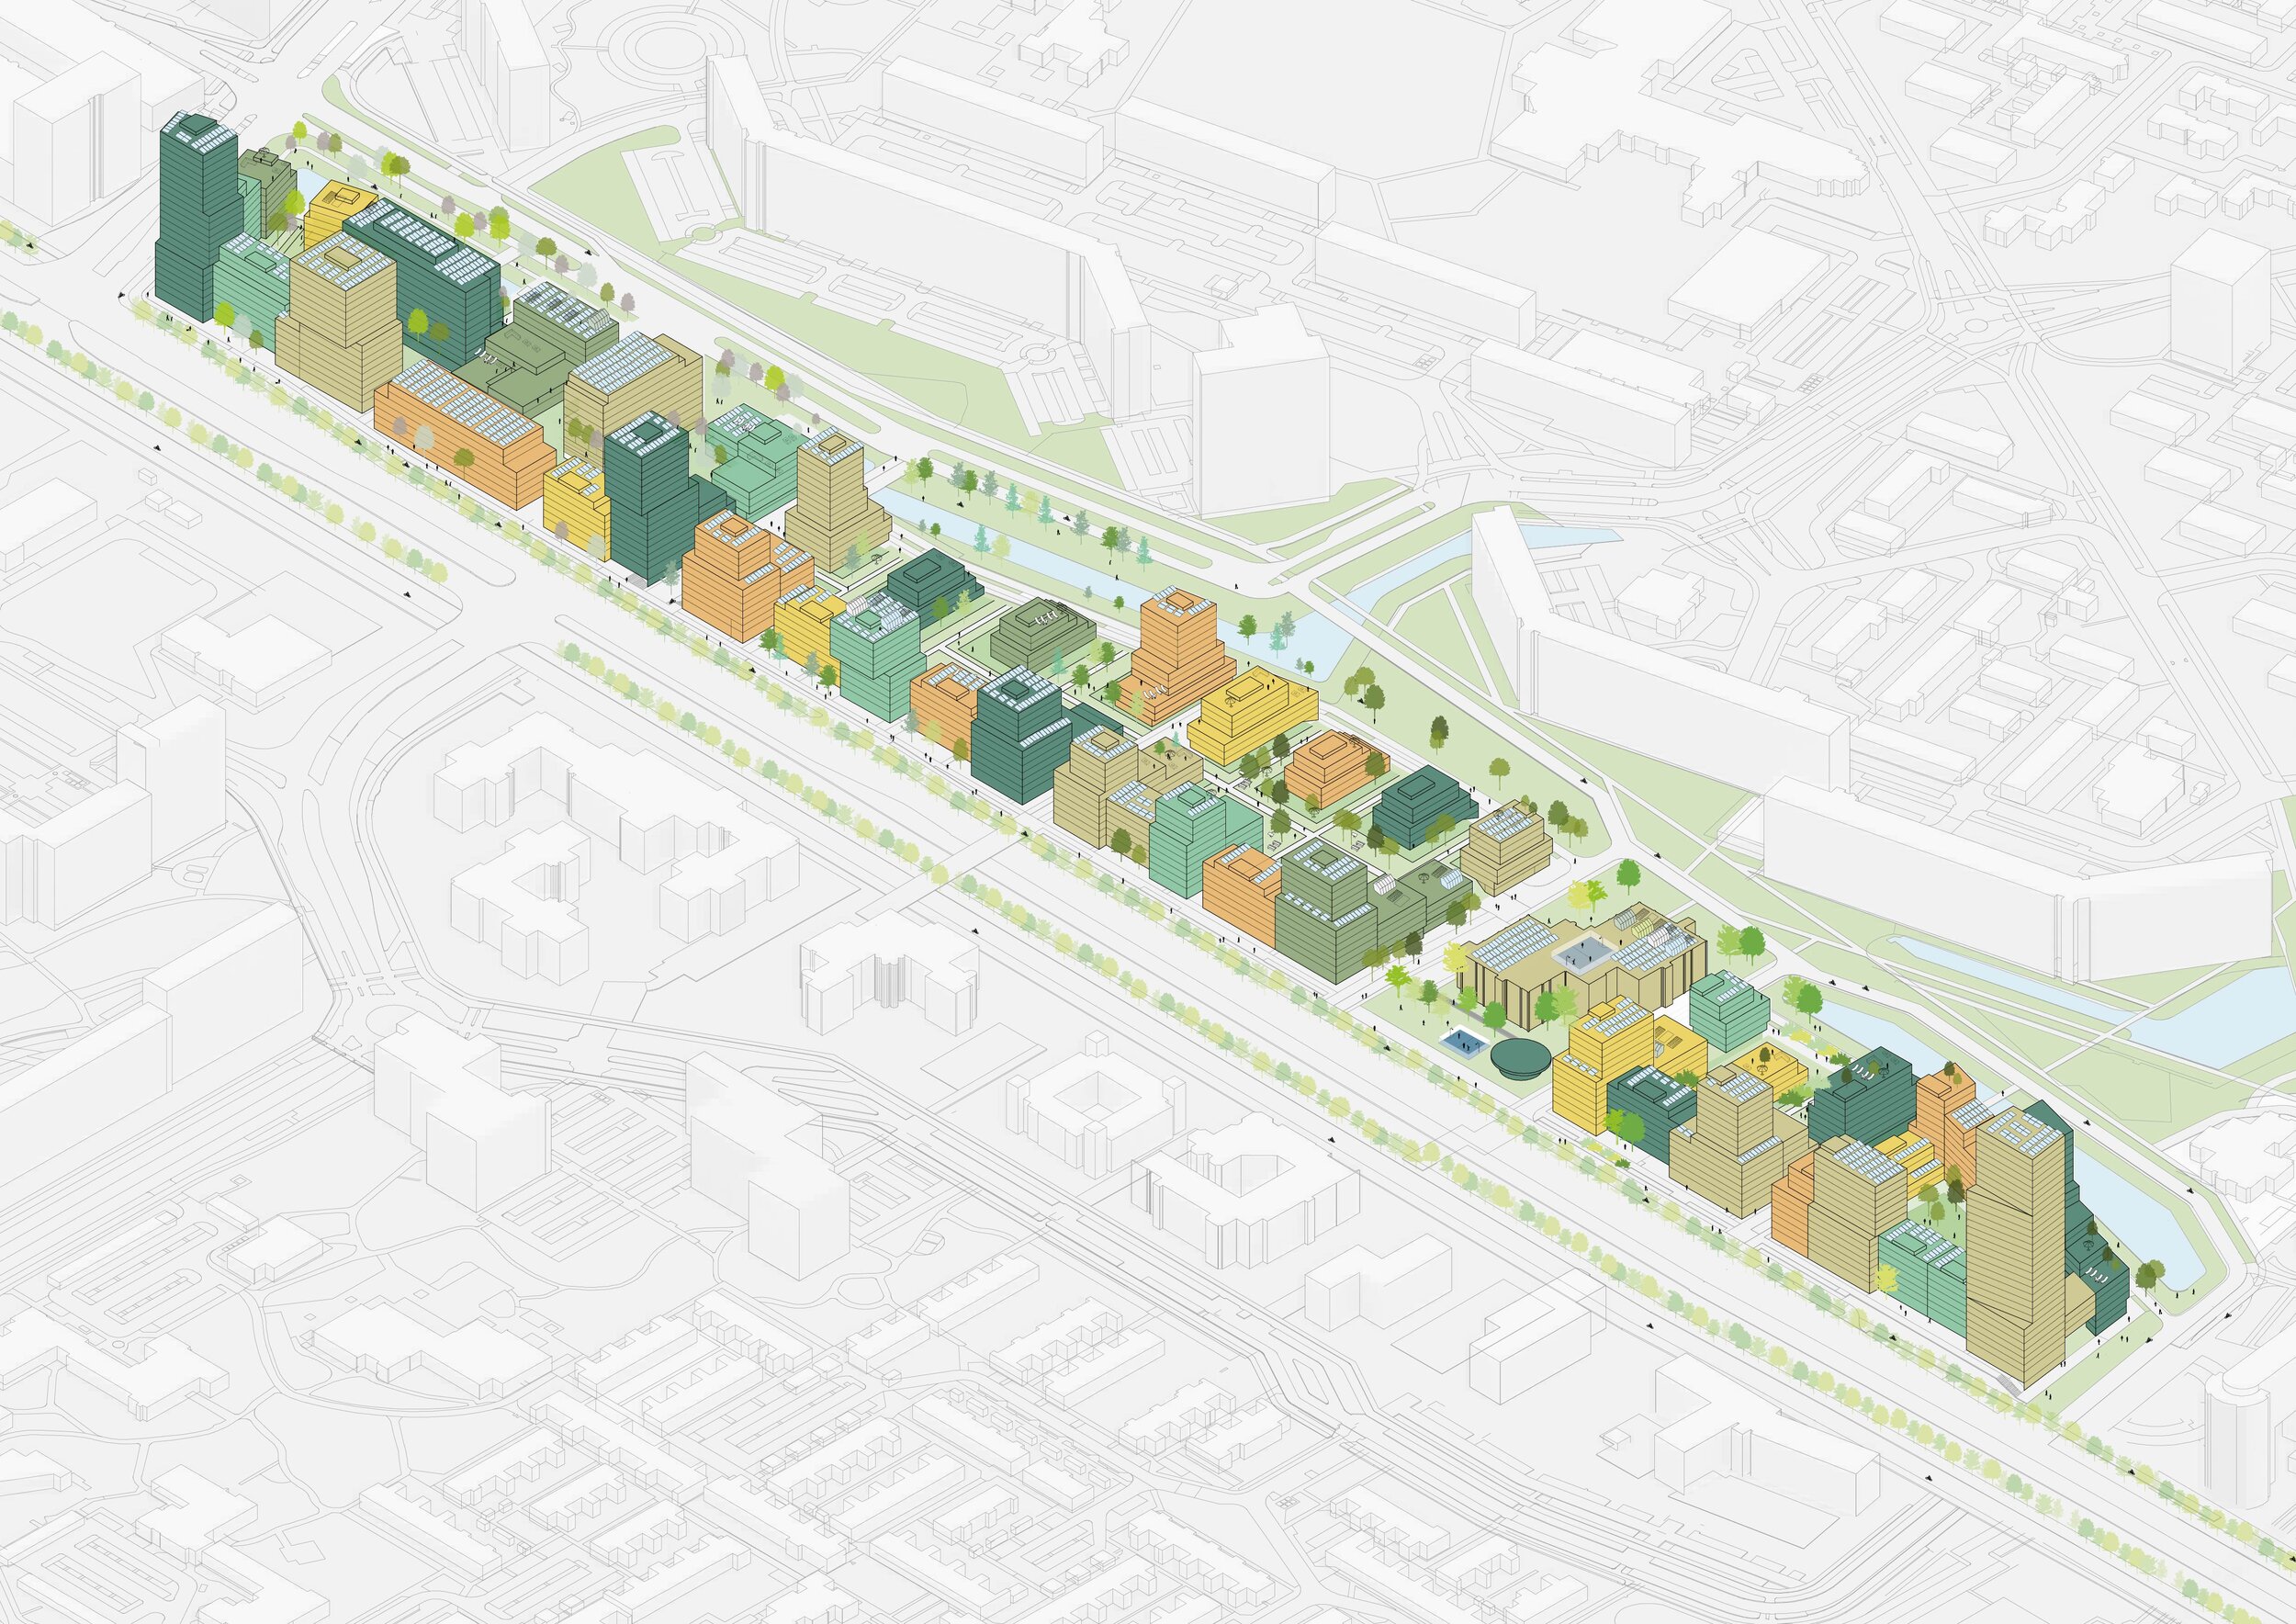  Future situation: A new green urban neighborhood 